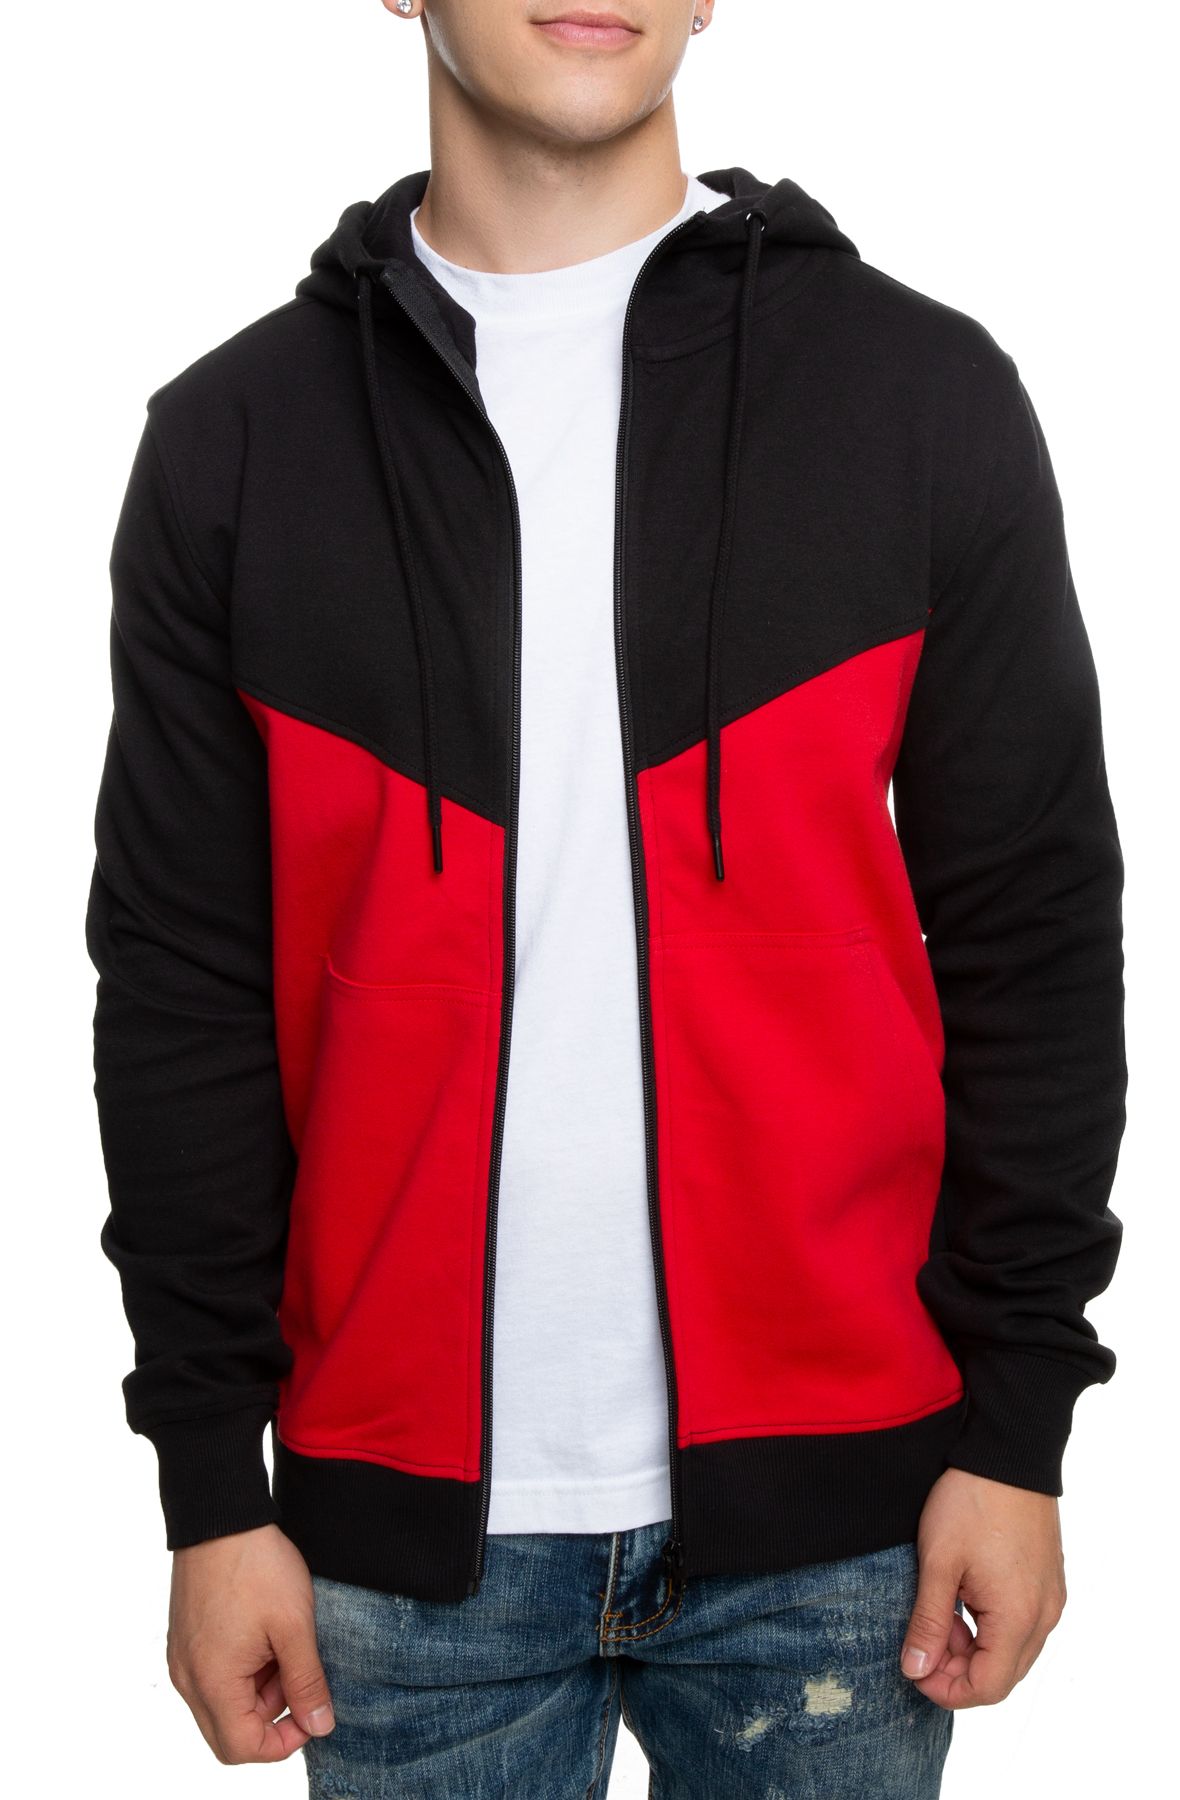 red and black hoodie